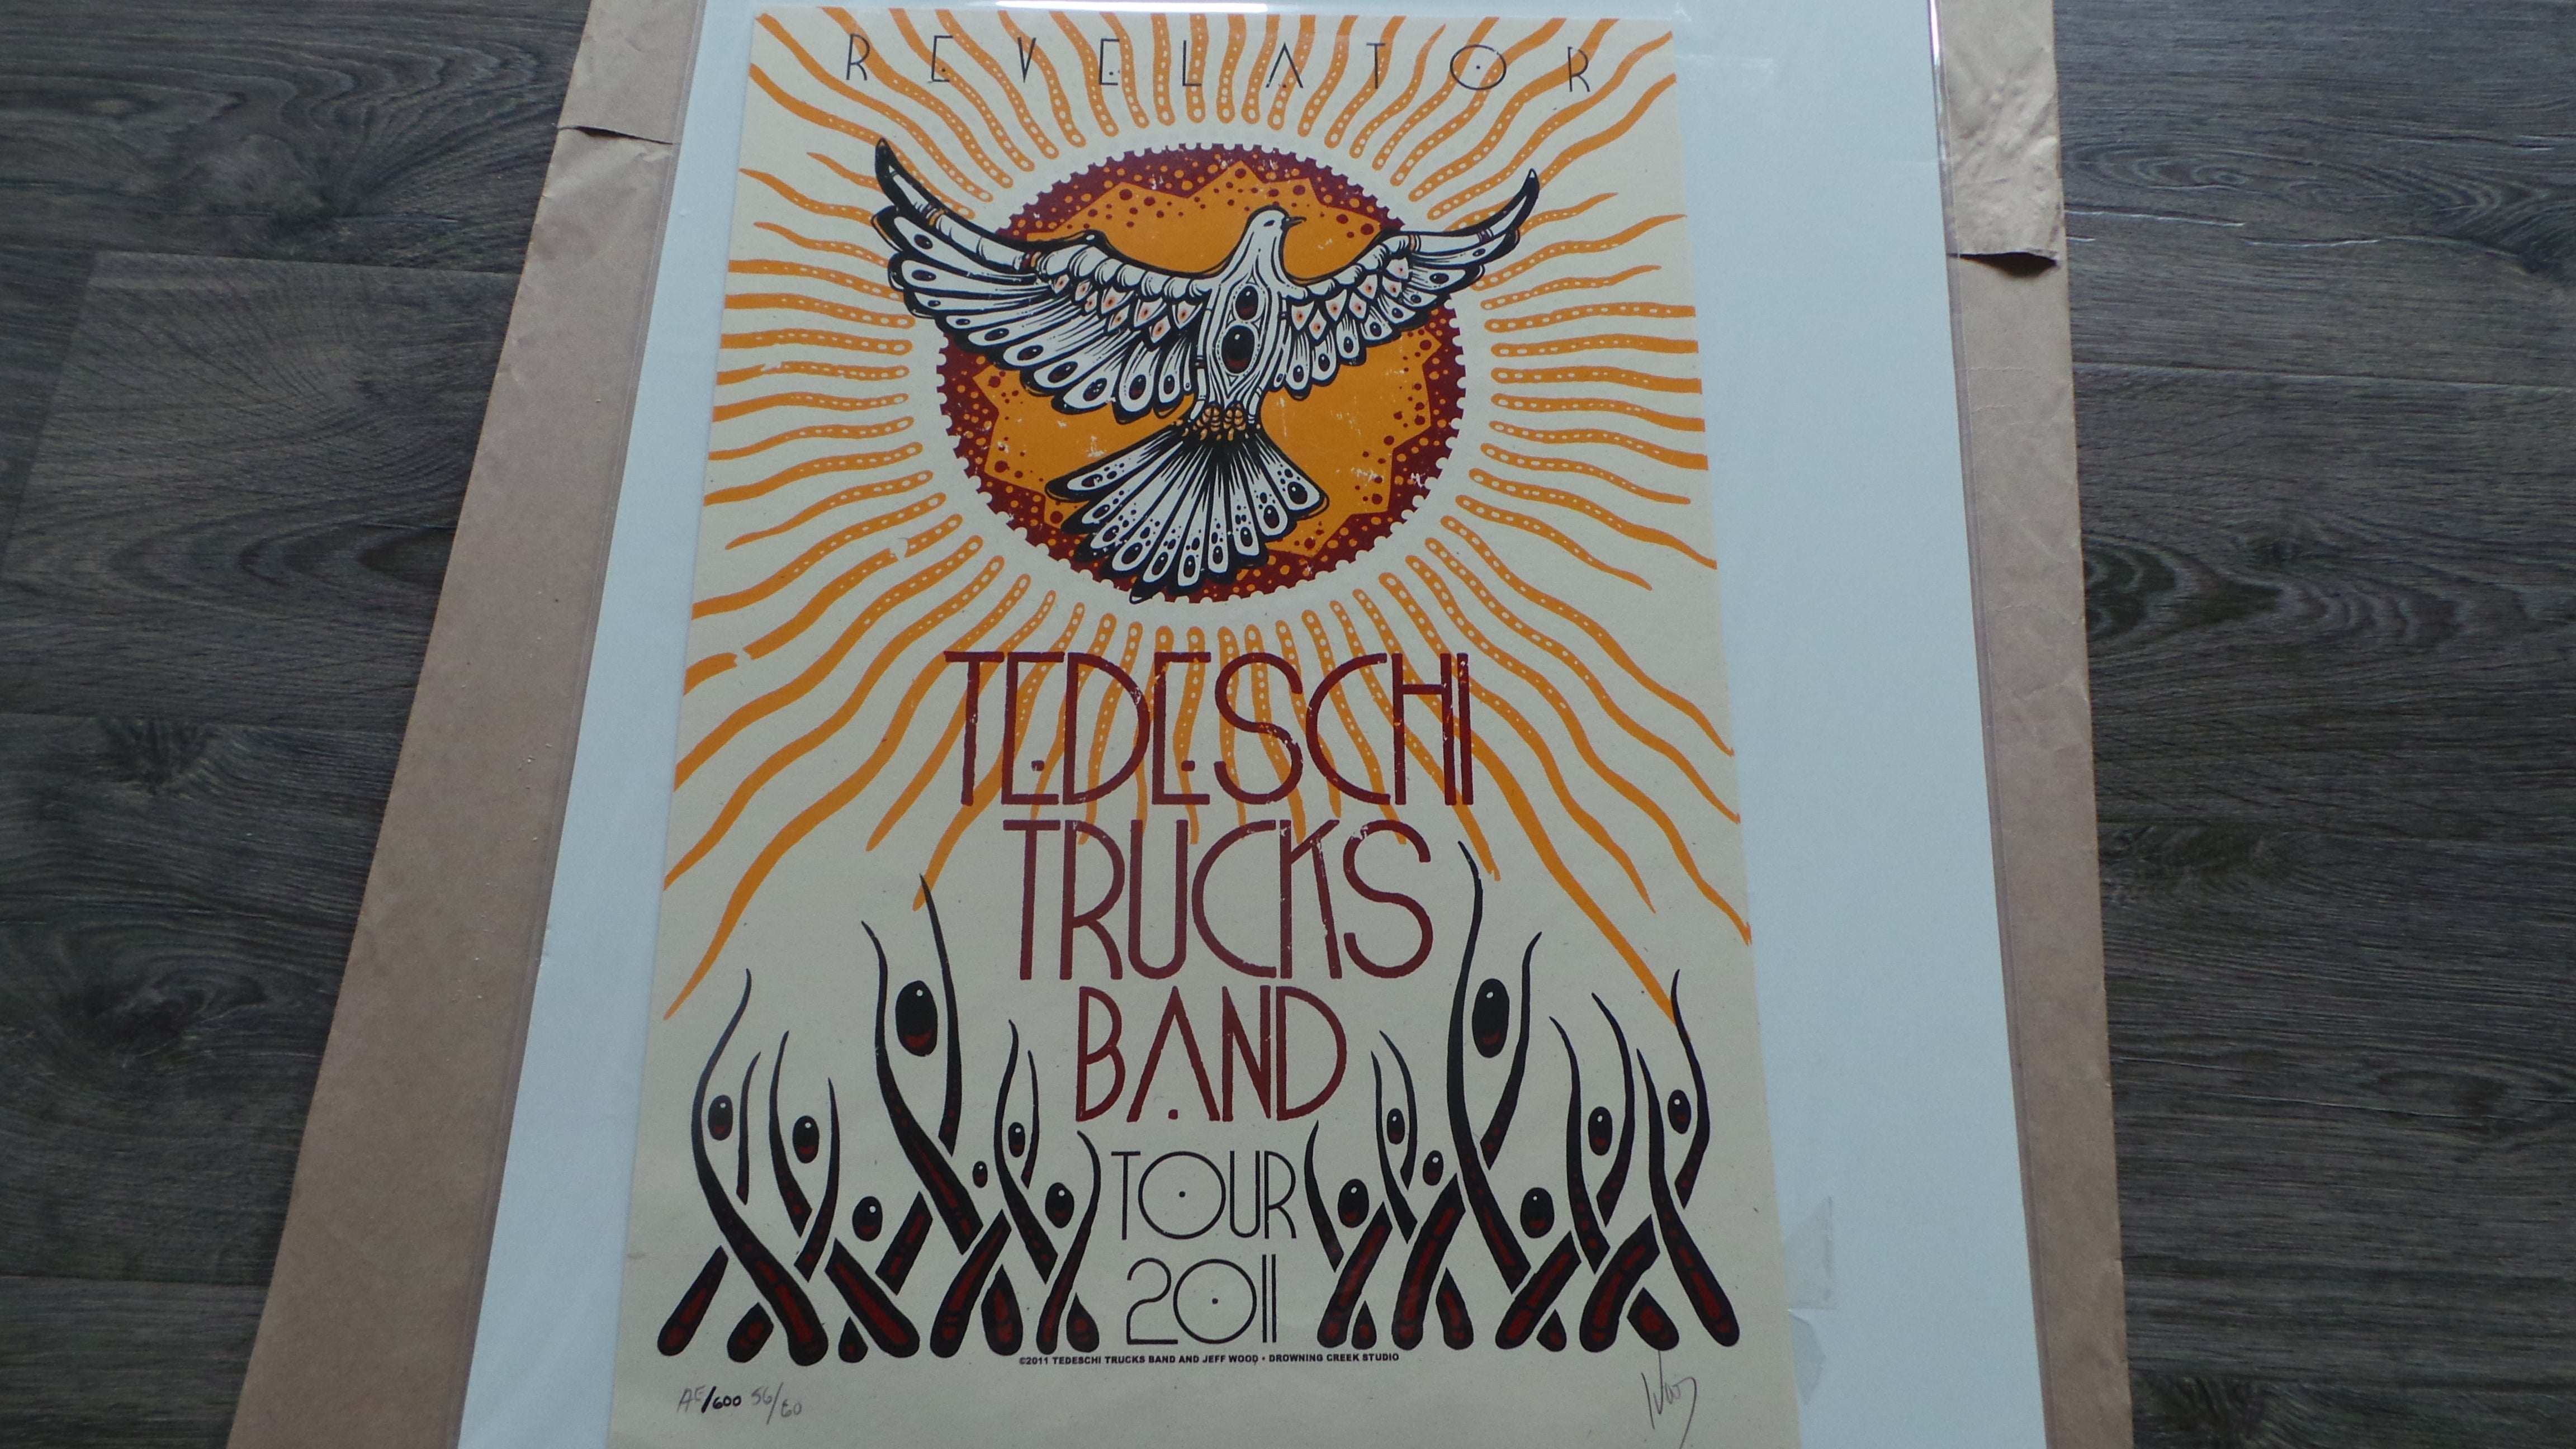 2011 Tedeschi Trucks Band Revelator Tour Poster by Jeff Wood, S/N'd